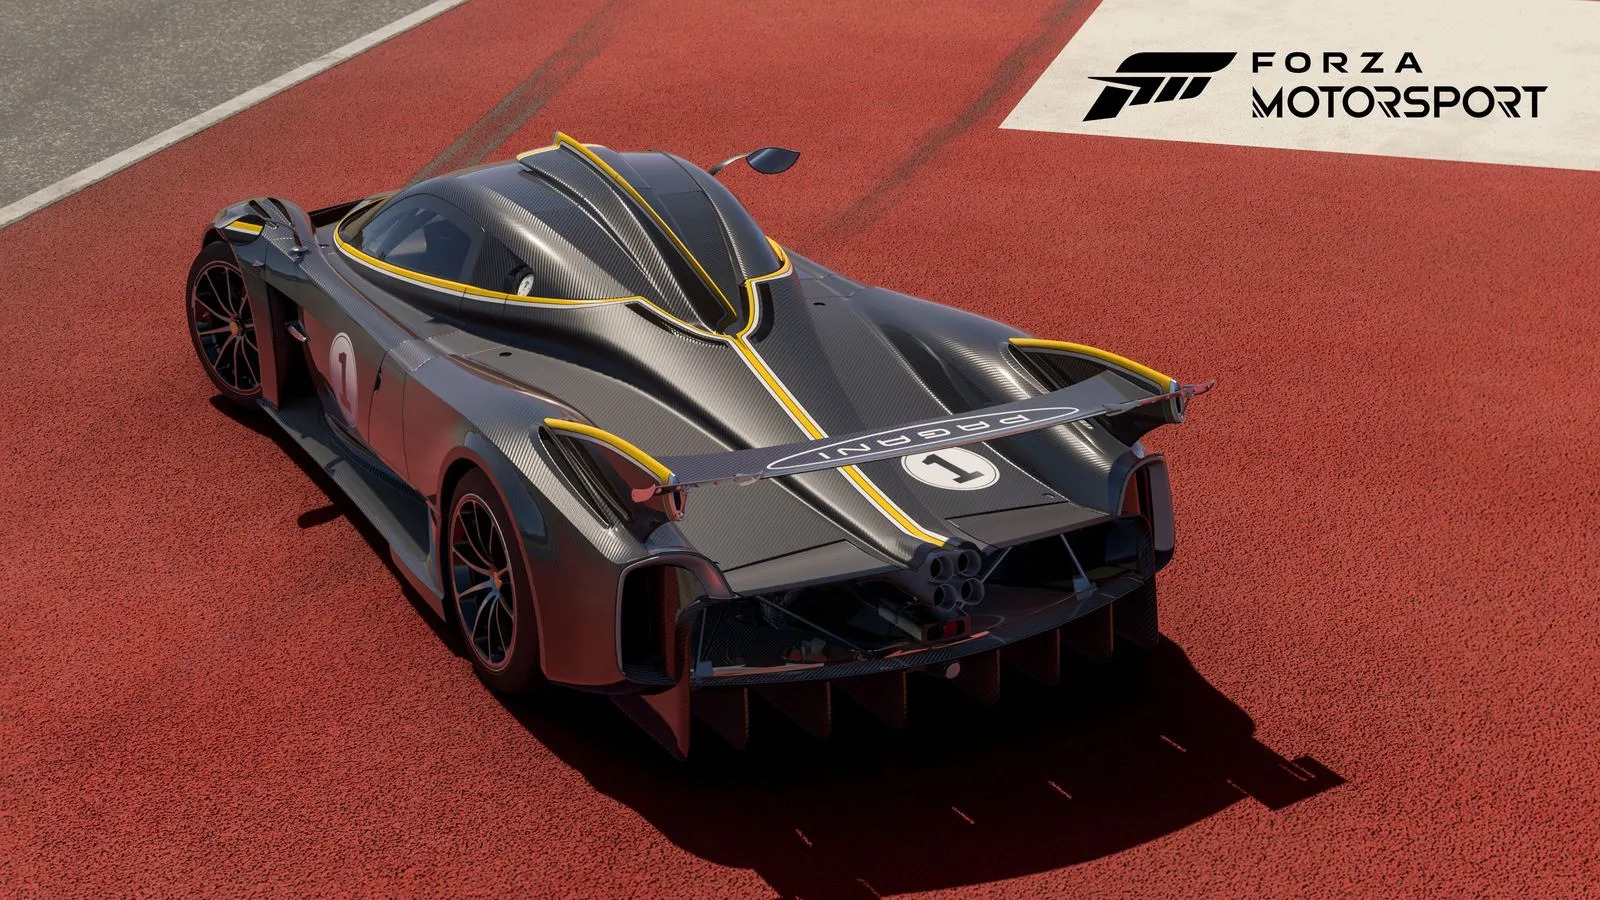 《Forza Motorsport》民间应承在“未来多少个月”改善AI对于手、民间车辆进度以及角逐纪律